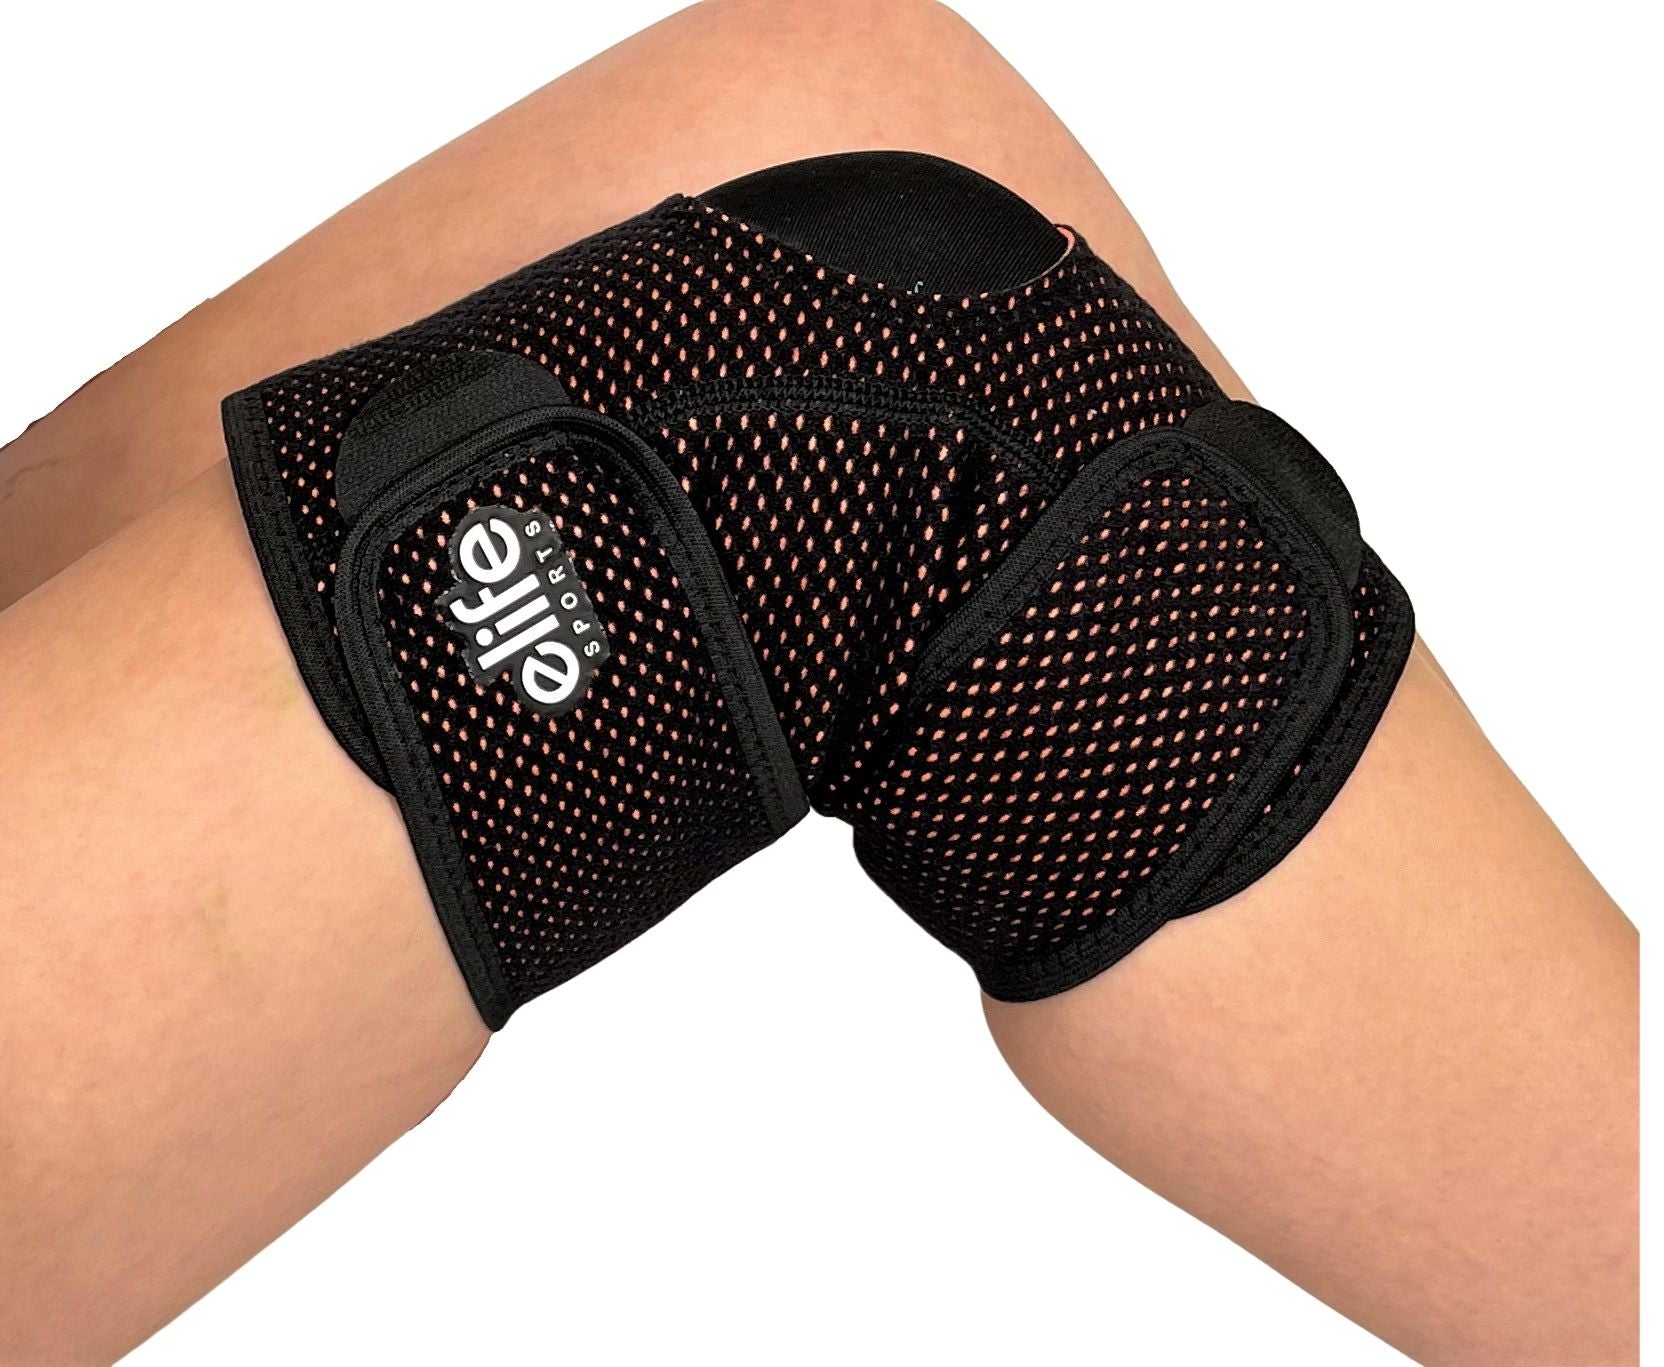 eLife Cool-Fit Adjustable Comfort Cool Breathable Sport Knee Support Brace | Wrap